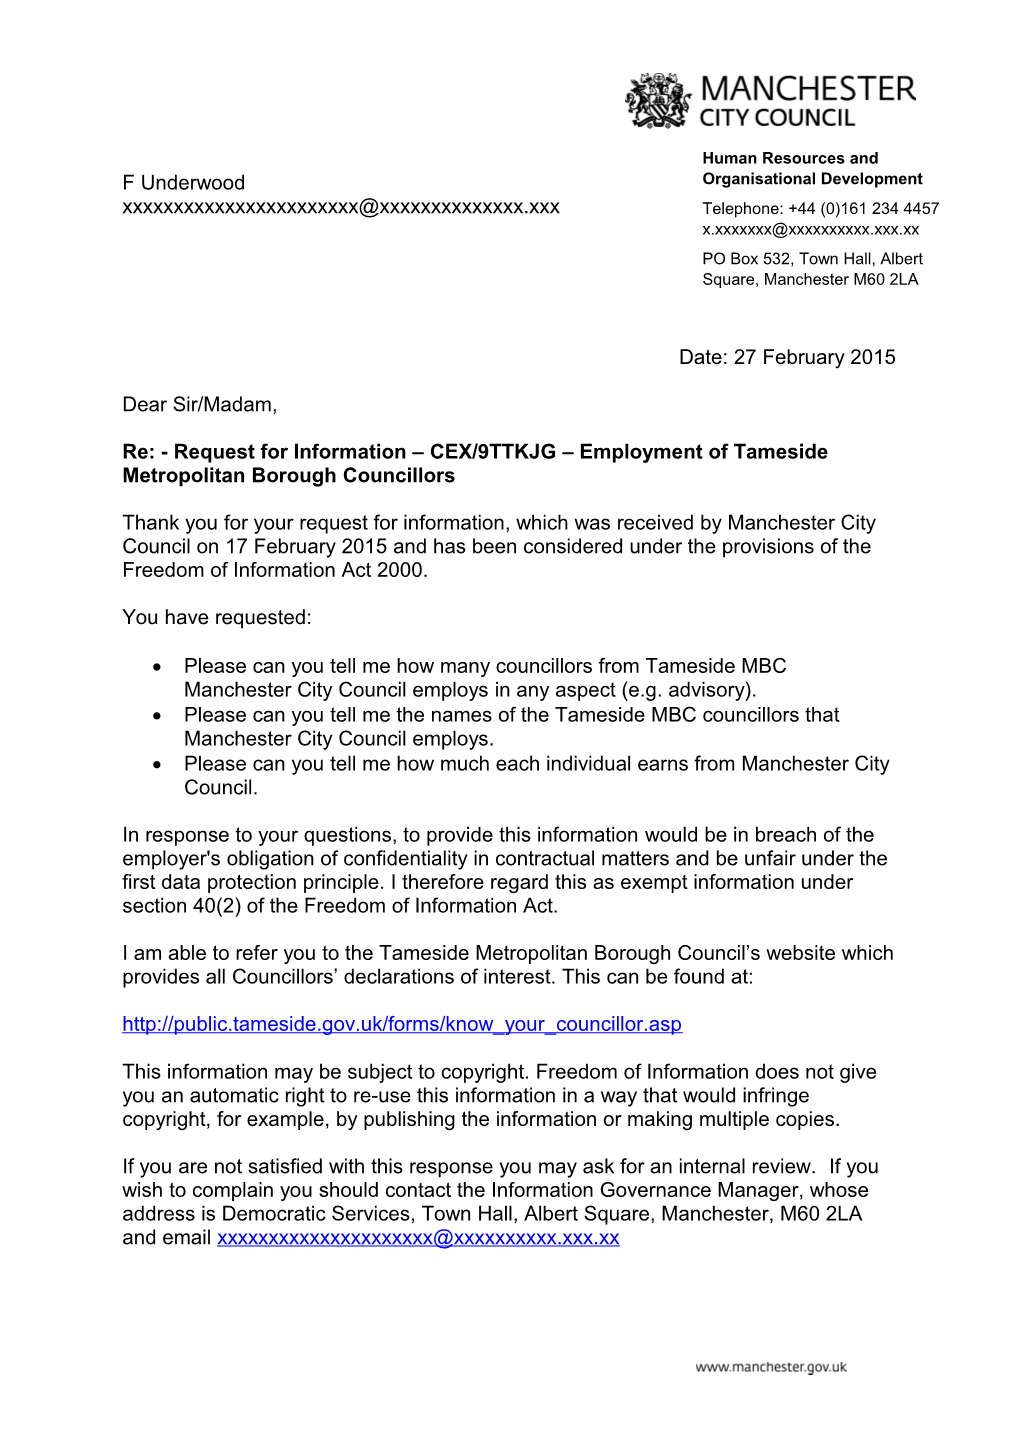 Re: - Request for Information CEX/9TTKJG Employment of Tameside Metropolitan Borough